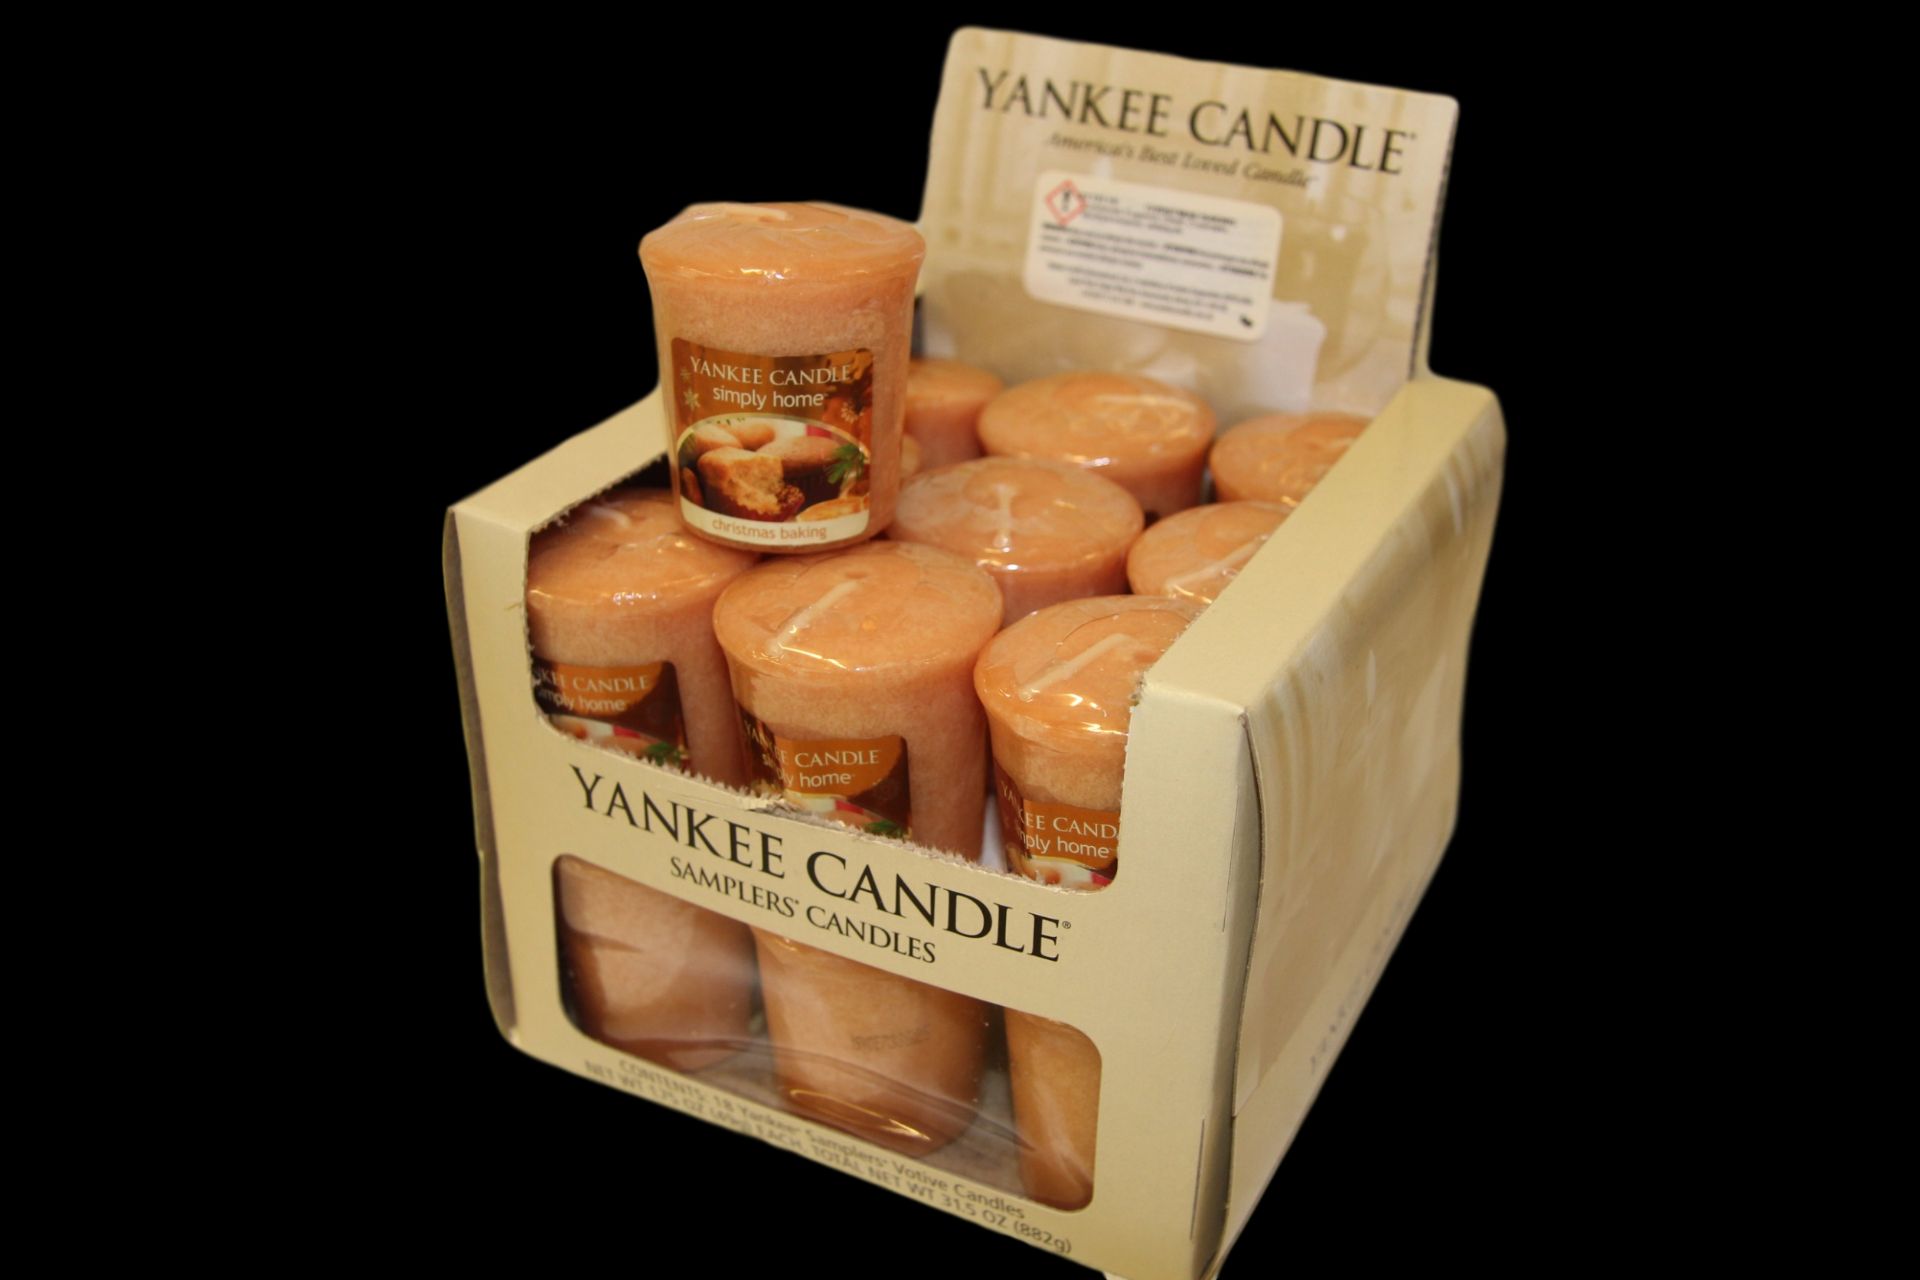 V Brand New 18 x Yankee Candle Christmas Baking 49g eBay Price £19.99 X 2 YOUR BID PRICE TO BE